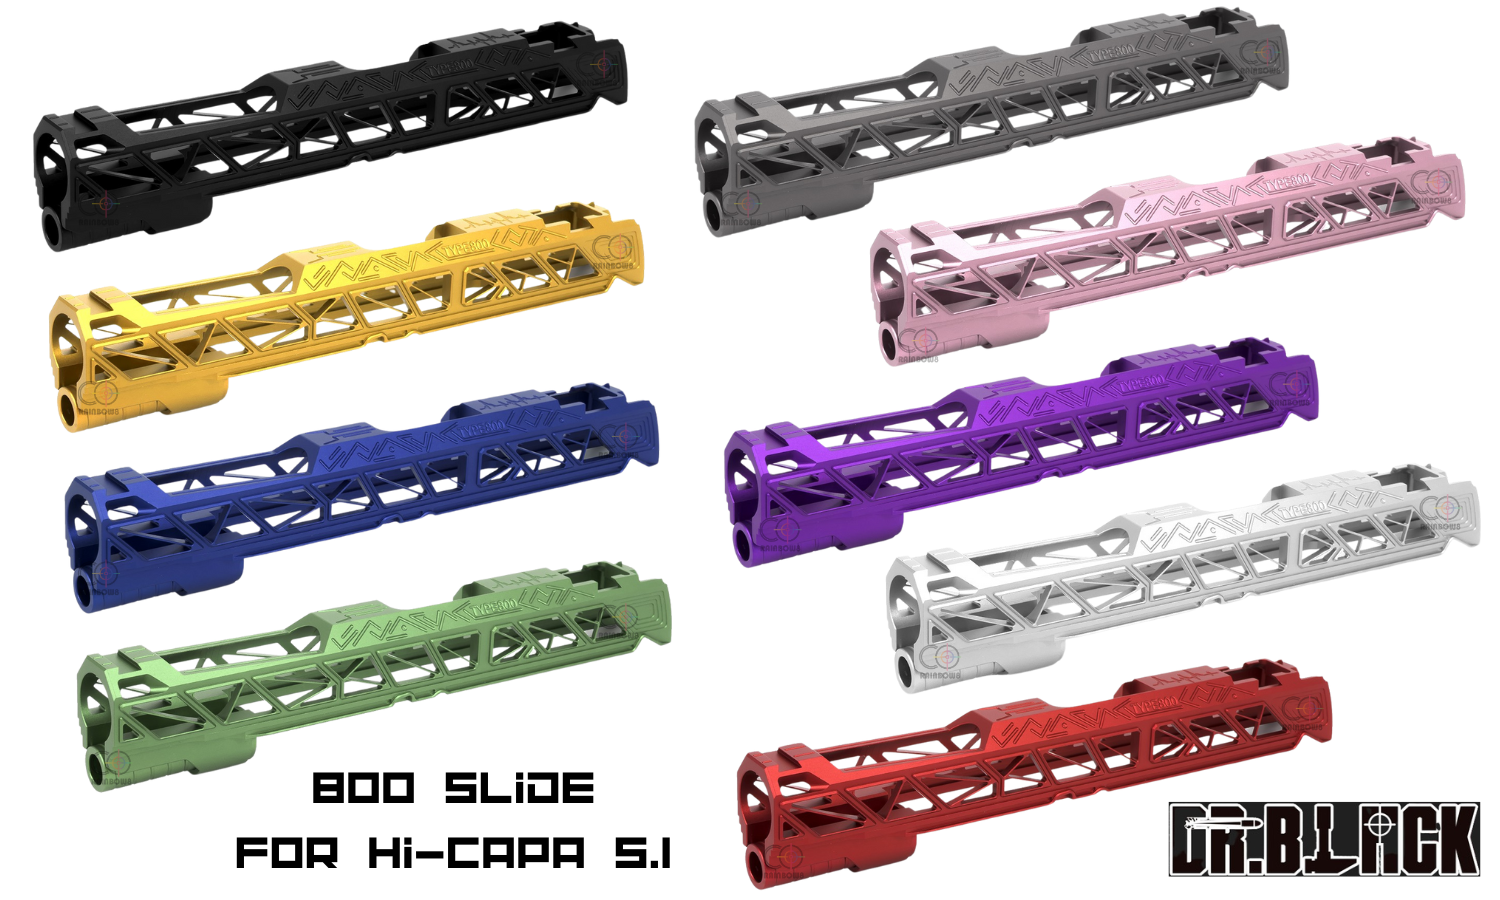 Dr. Black 5.1 Type 800 Aluminum Slide for TM Hi-Capa (9 Colors)